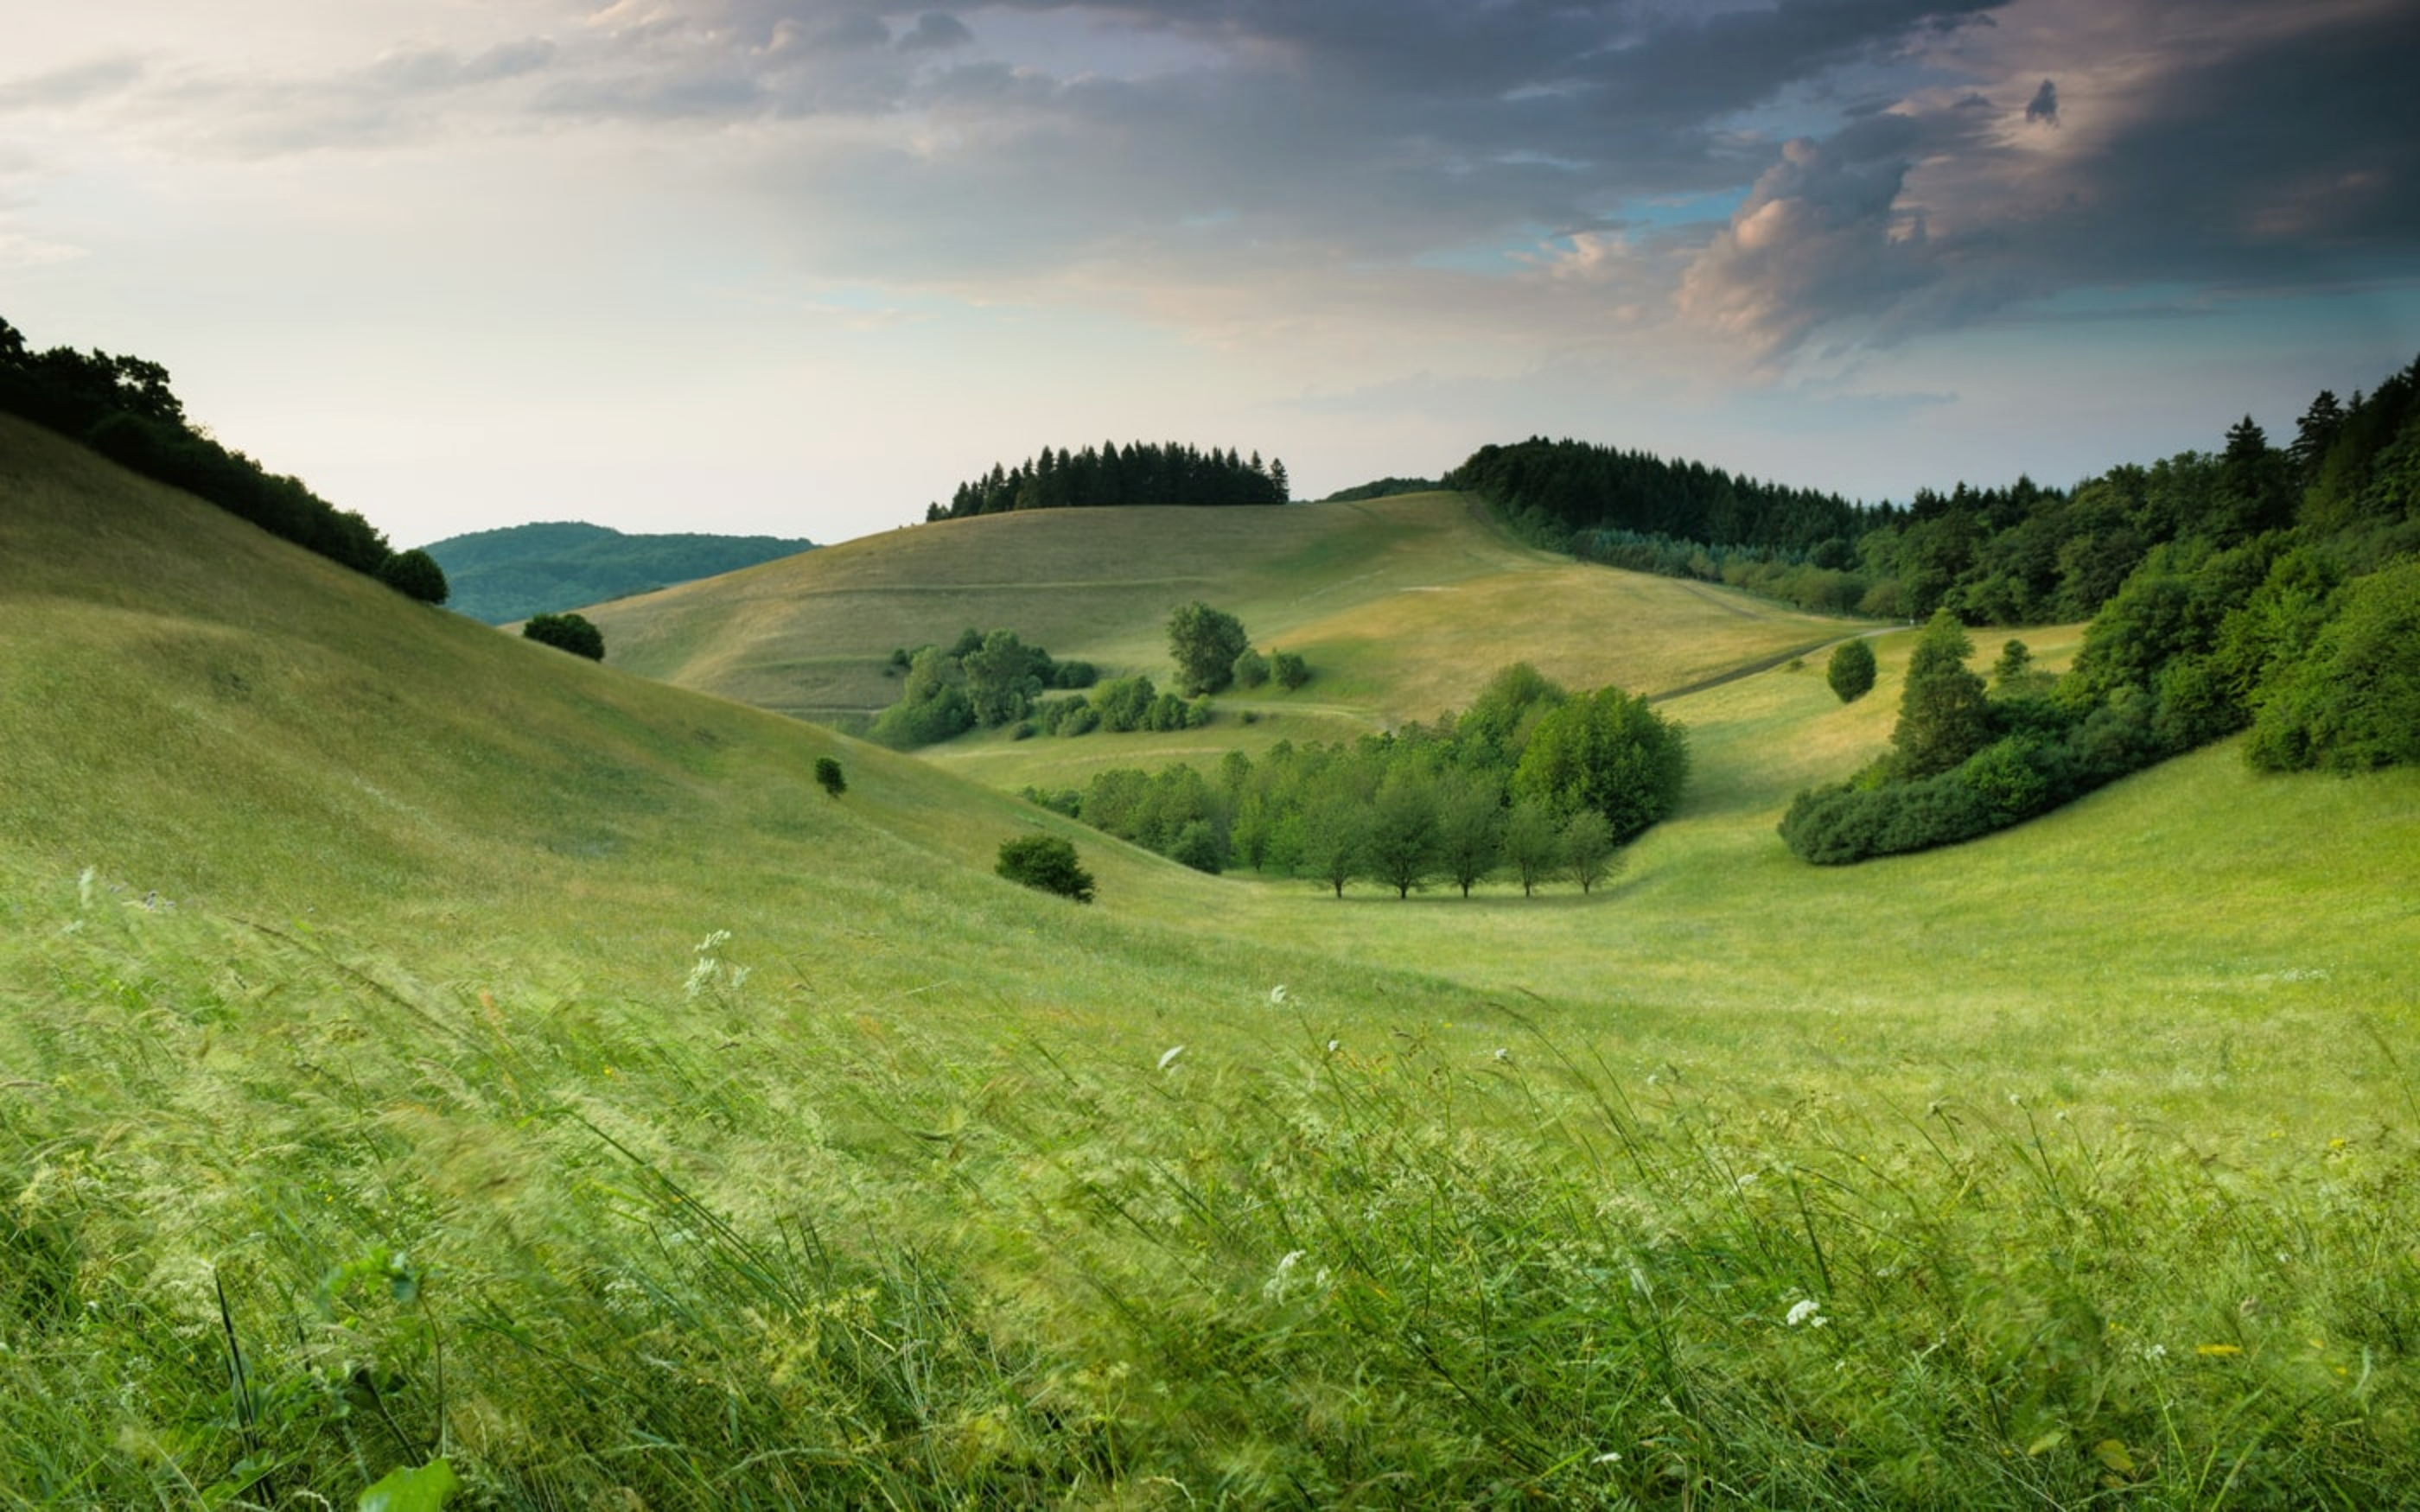 Landscape - Lauri Koutaniemi द्वारा निर्मित photo के साथ